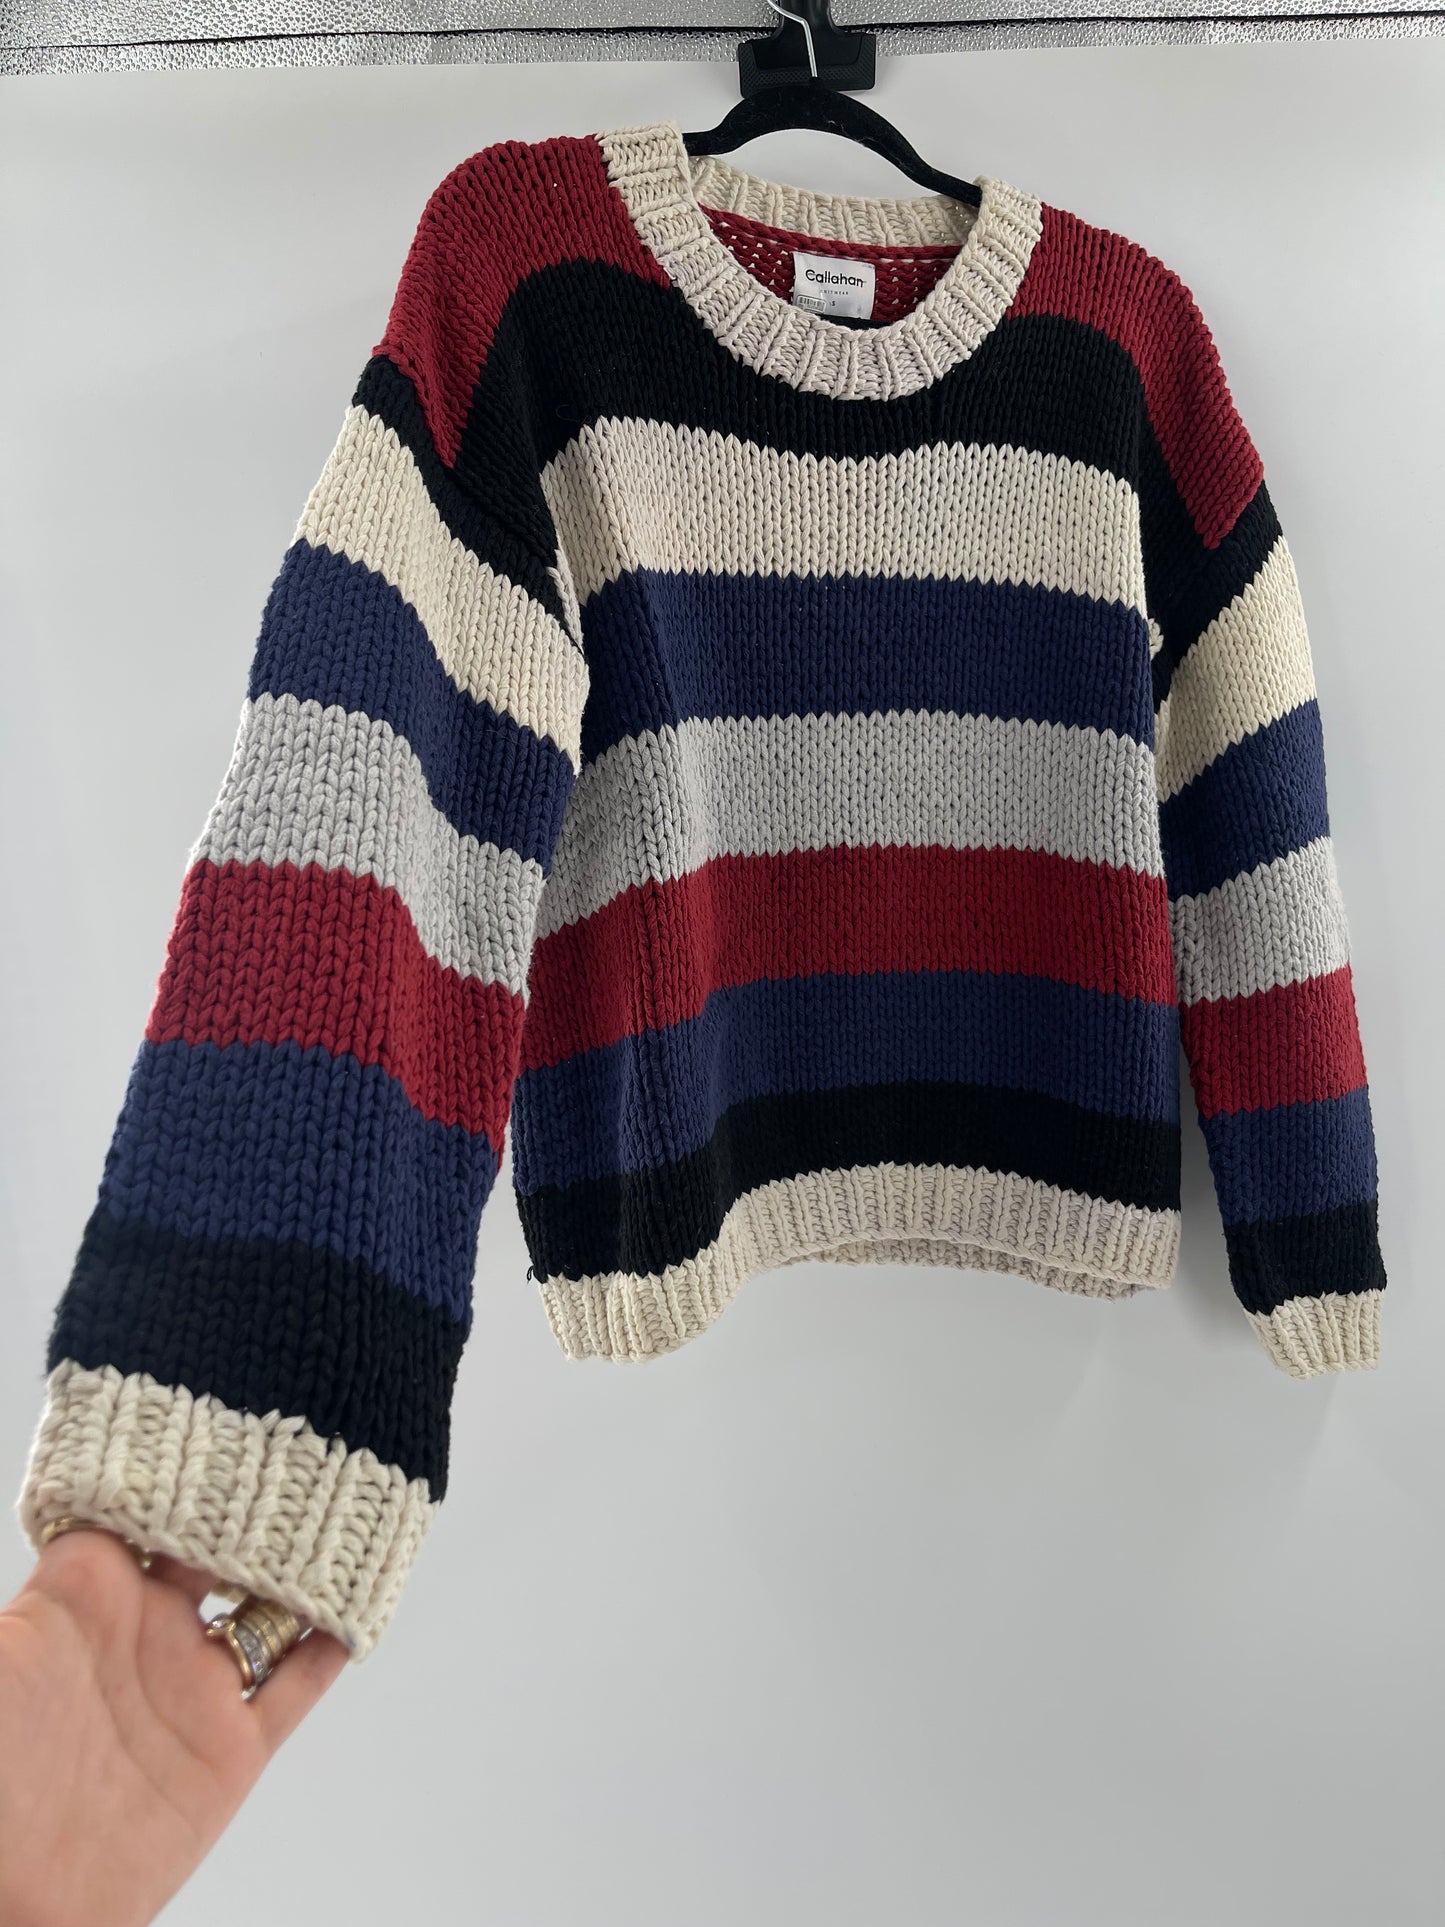 CALLAHAN knitwear Striped Sweater (S)